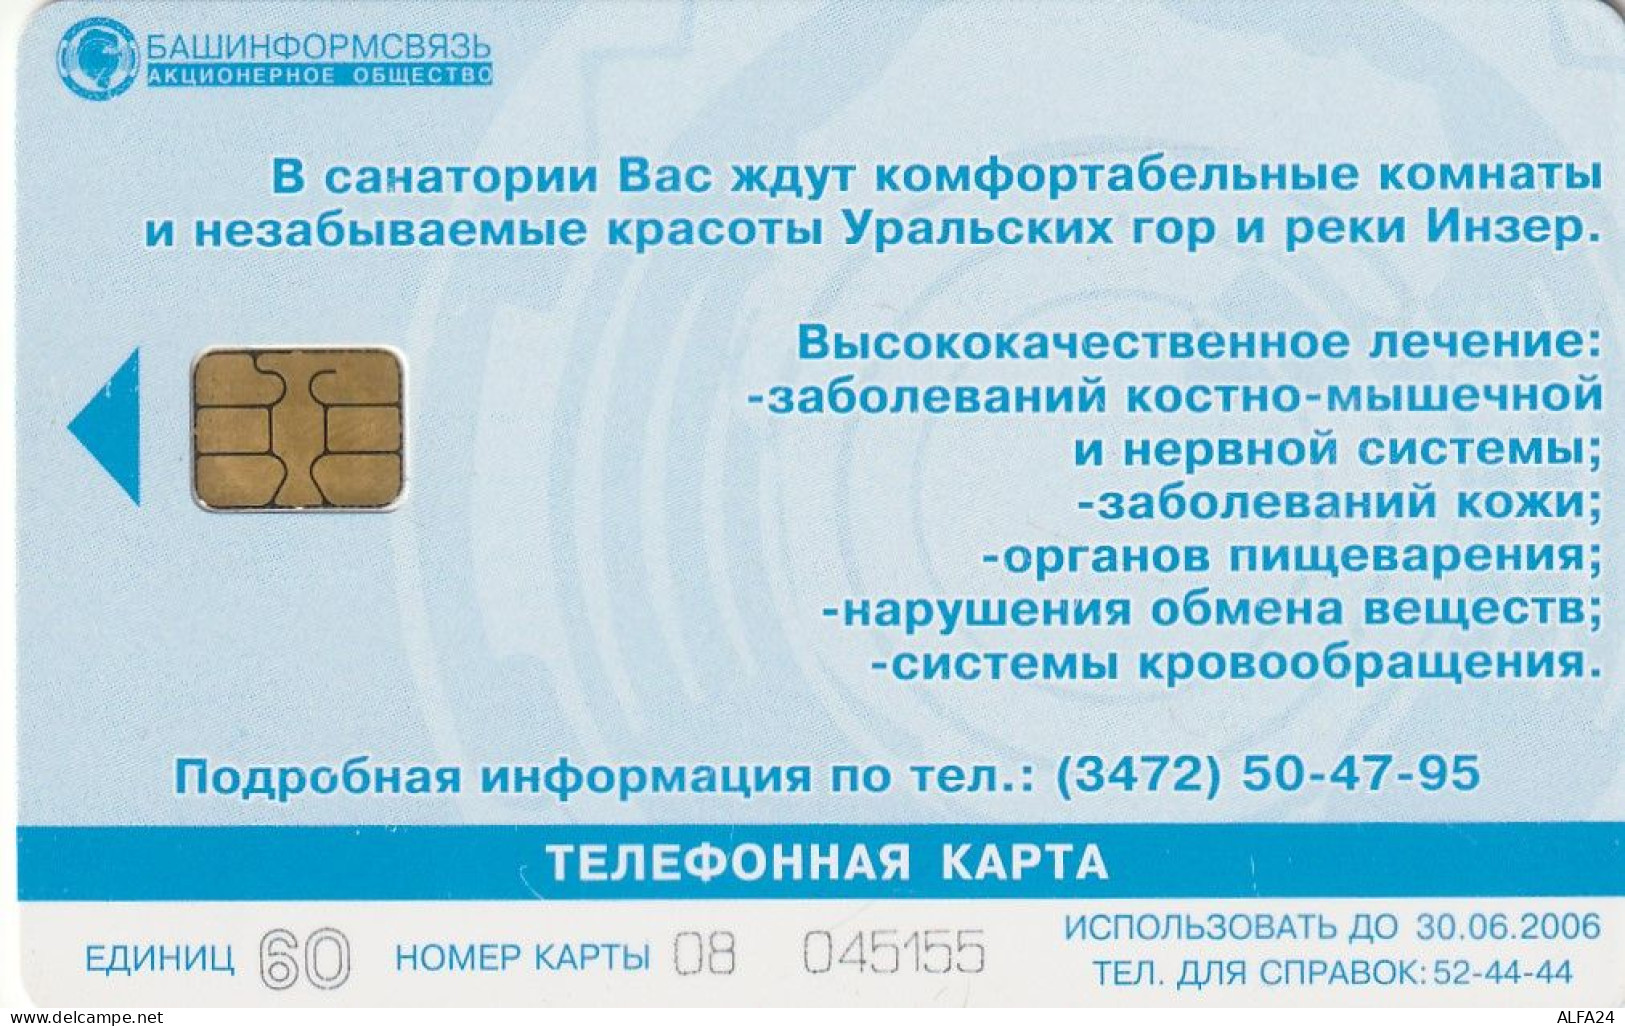 PHONE CARD RUSSIA Bashinformsvyaz - Ufa (E9.25.6 - Rusland